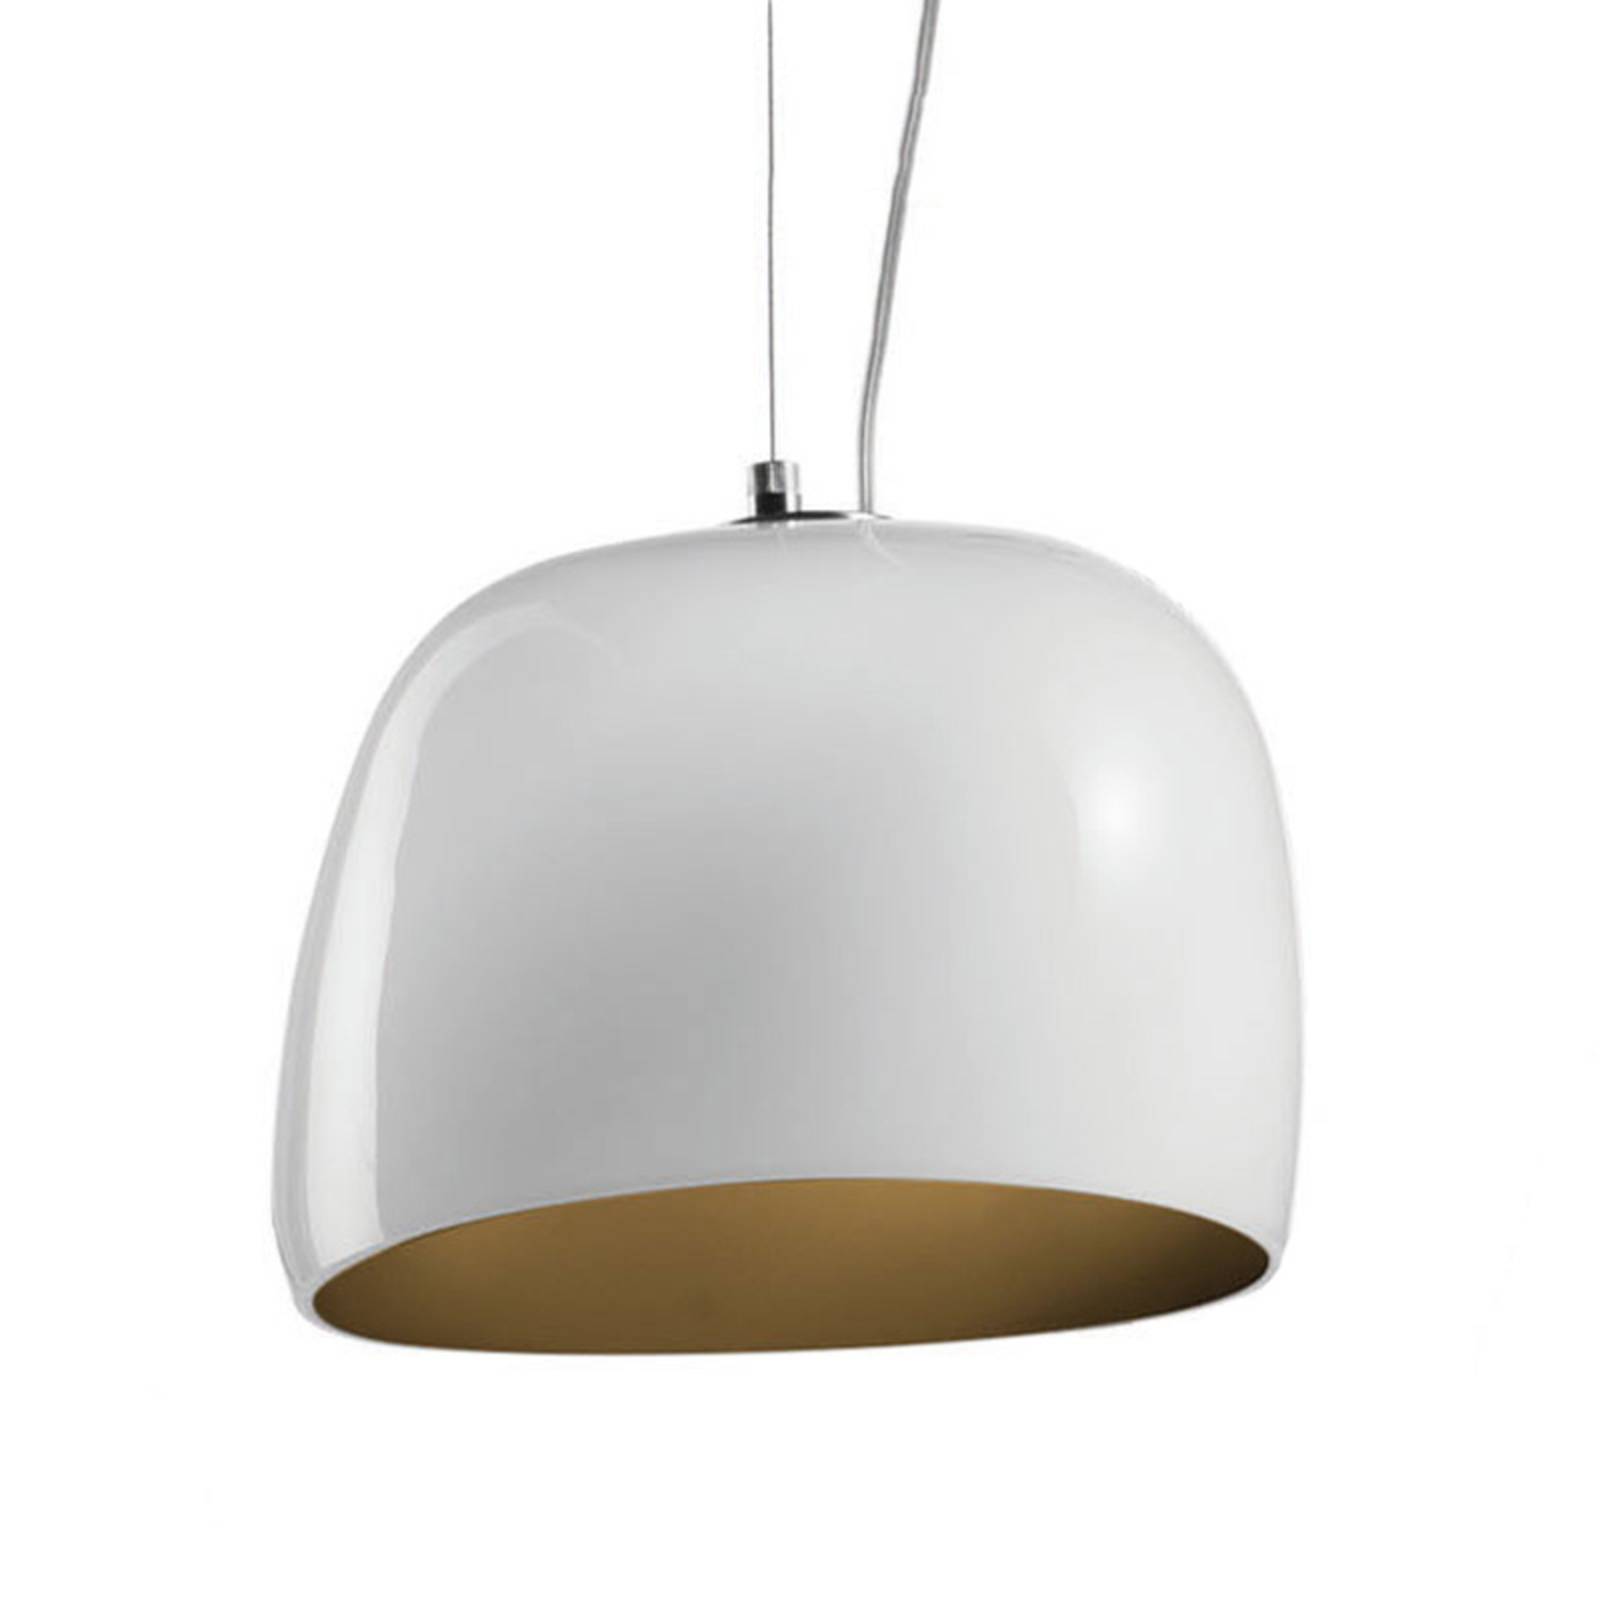 Hanglamp Surface Ø 27 cm, E27 wit/aardbruin